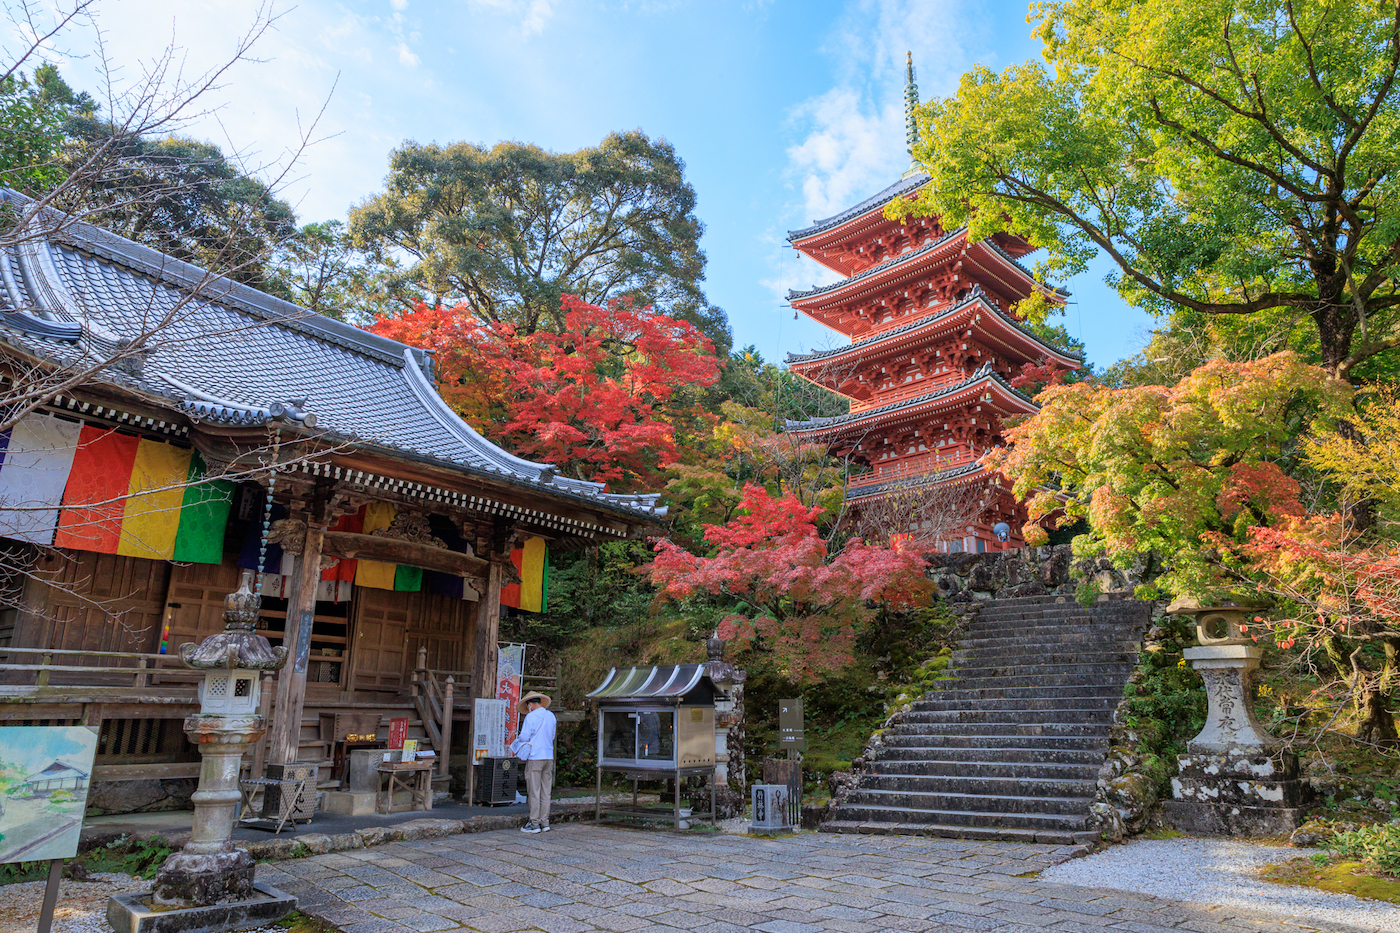 chikurinji temple in Kochi Japan in autumn